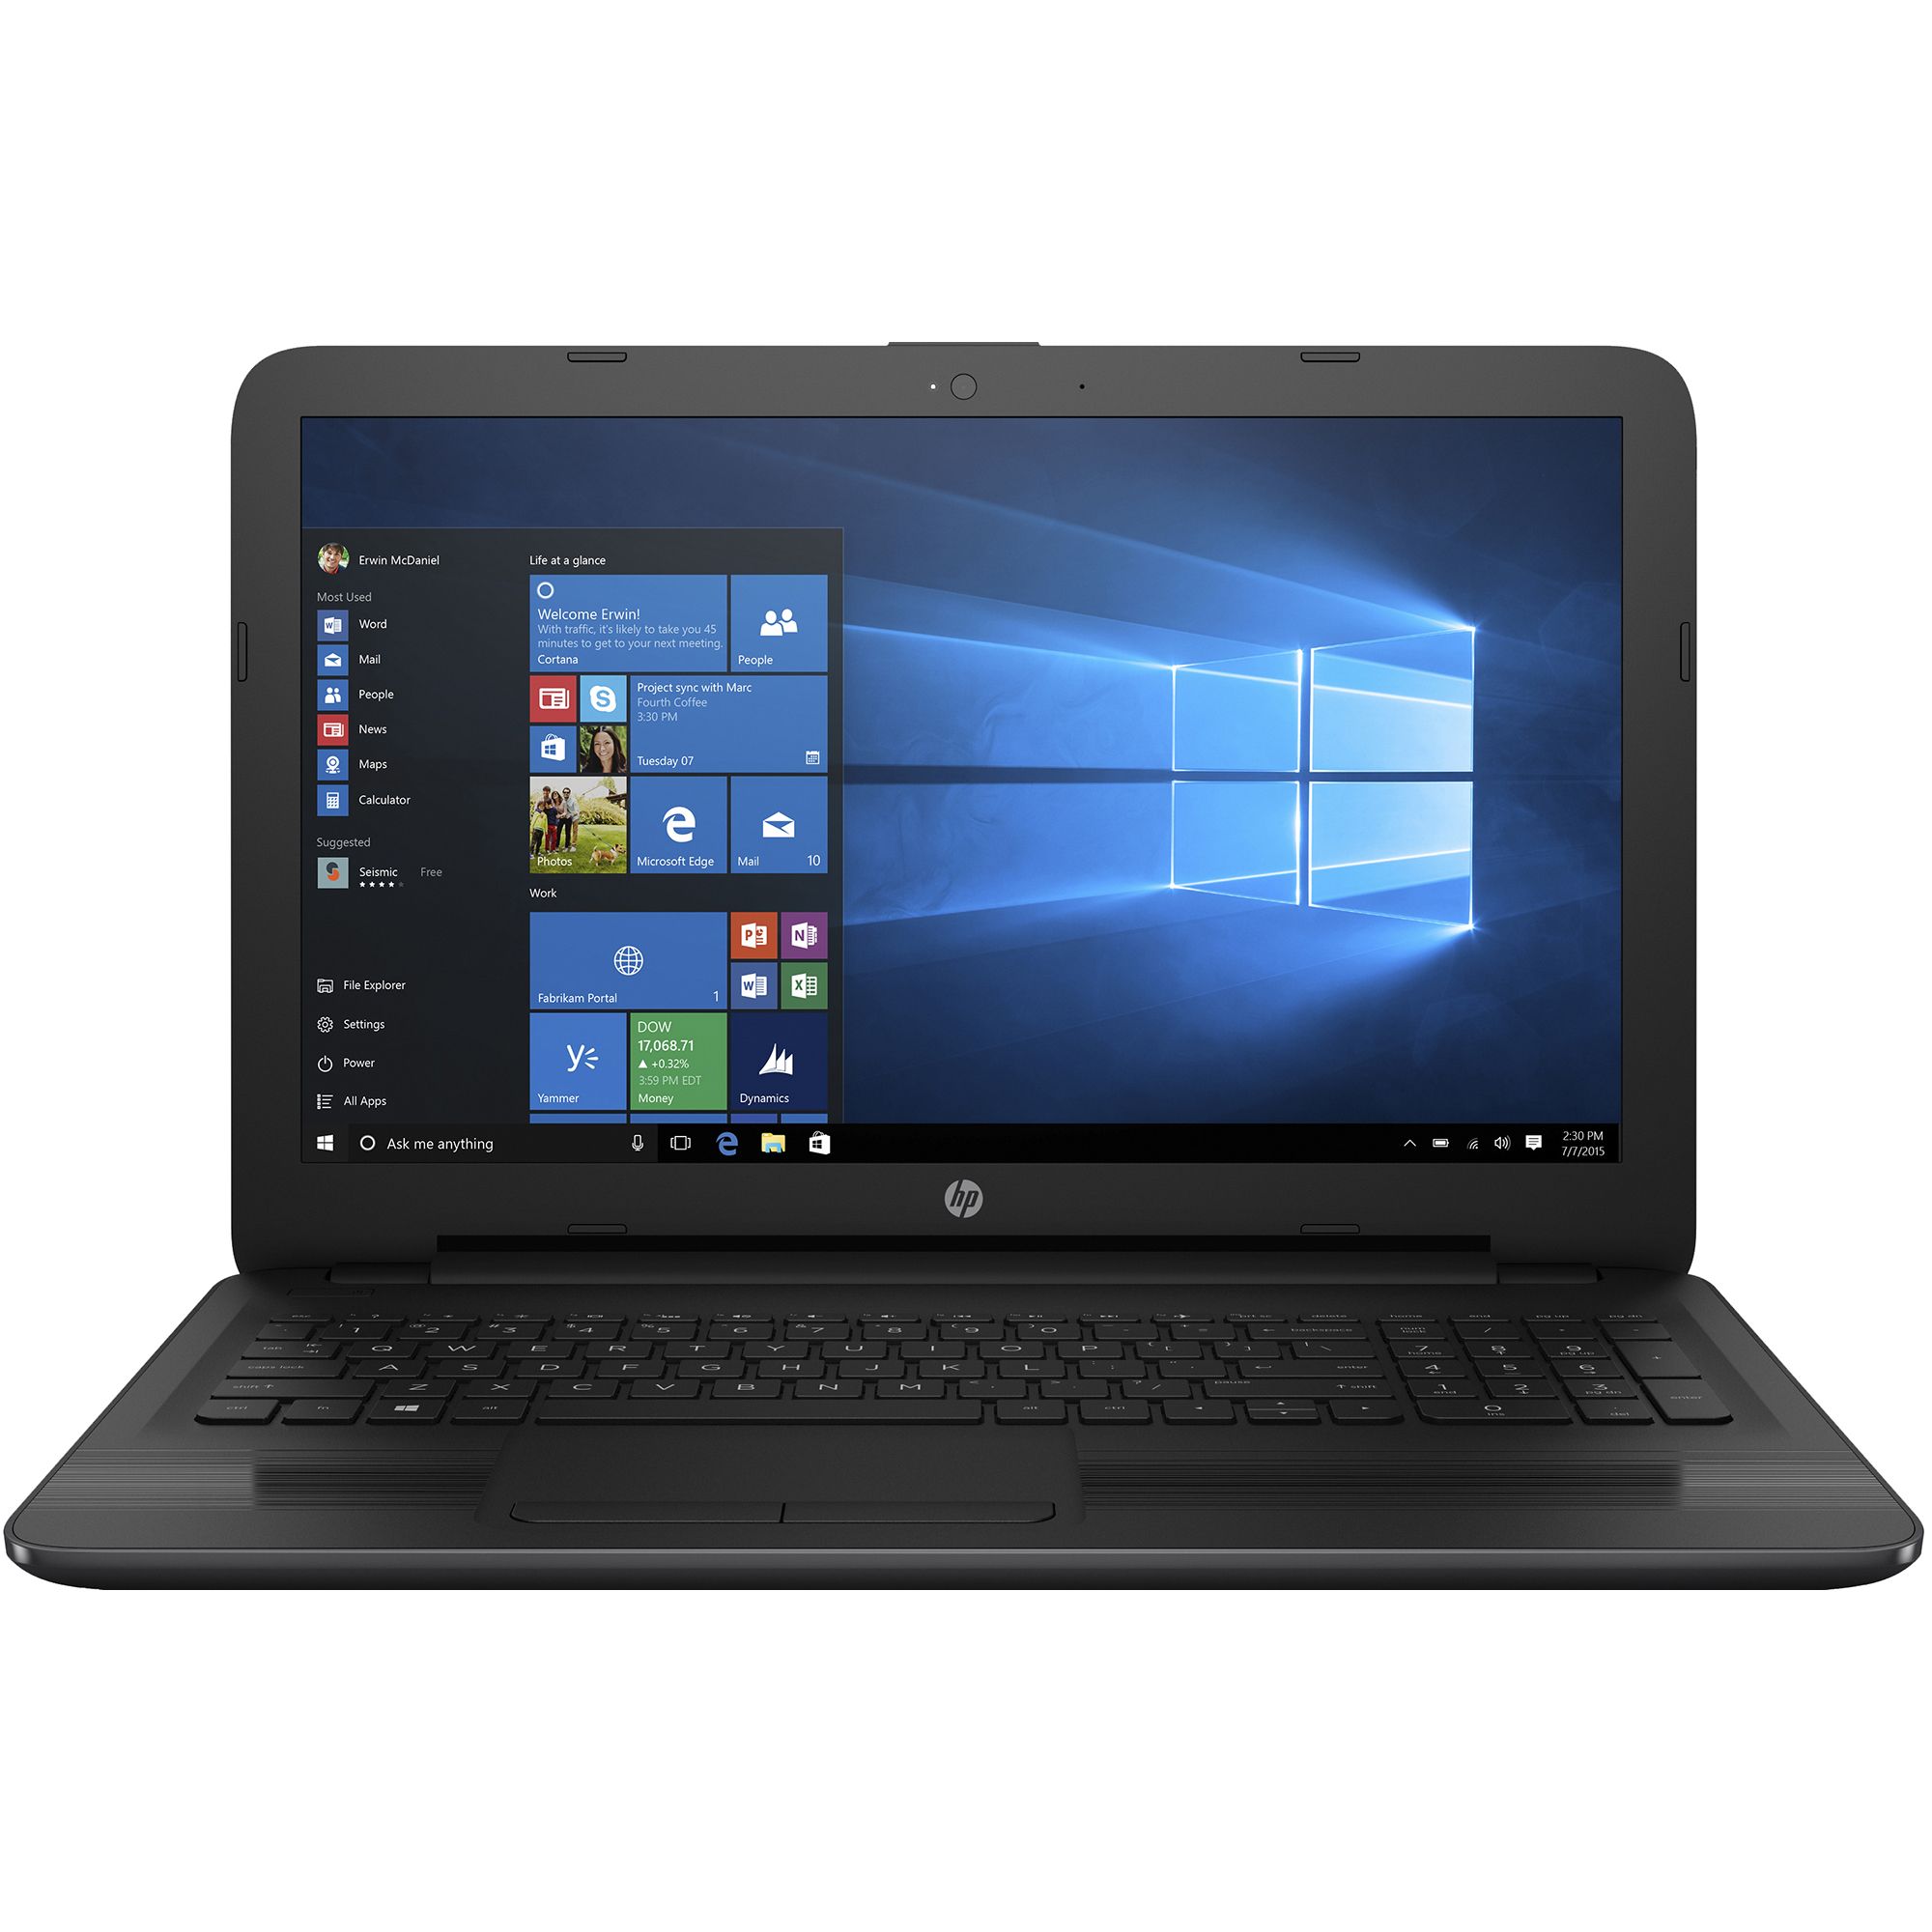  Laptop HP 250 G5, Intel Core i3-5005U, 4GB DDR3, HDD 500GB, Intel HD Graphics, Windows 10 Home 